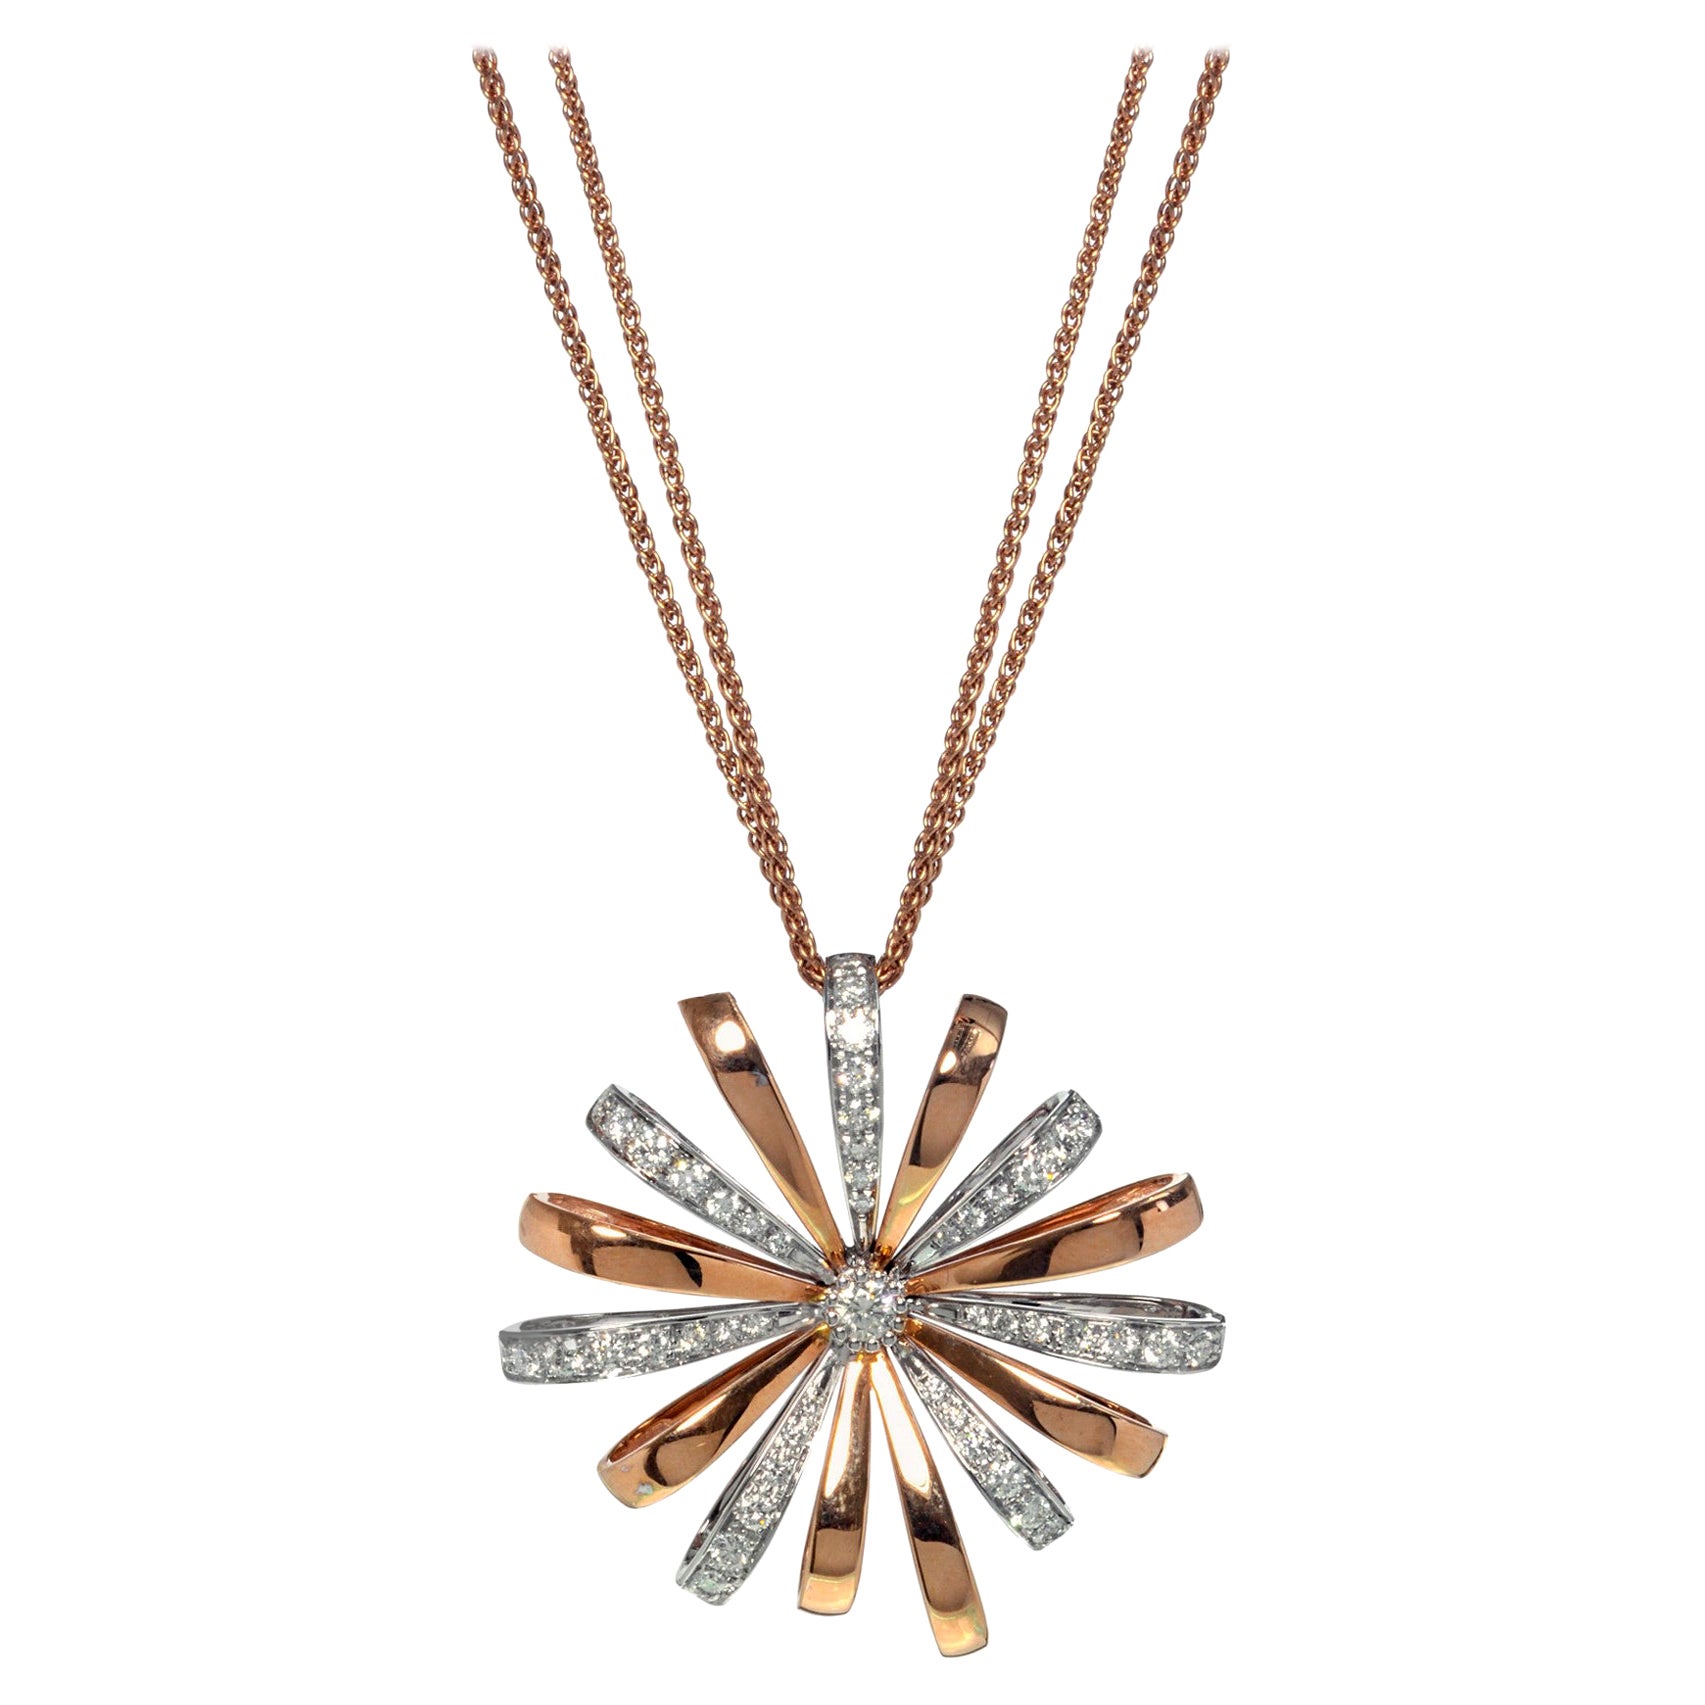 Luca Carati Diamond Pendant Long Necklace 18K Rose & White Gold 1.28Cttw For Sale